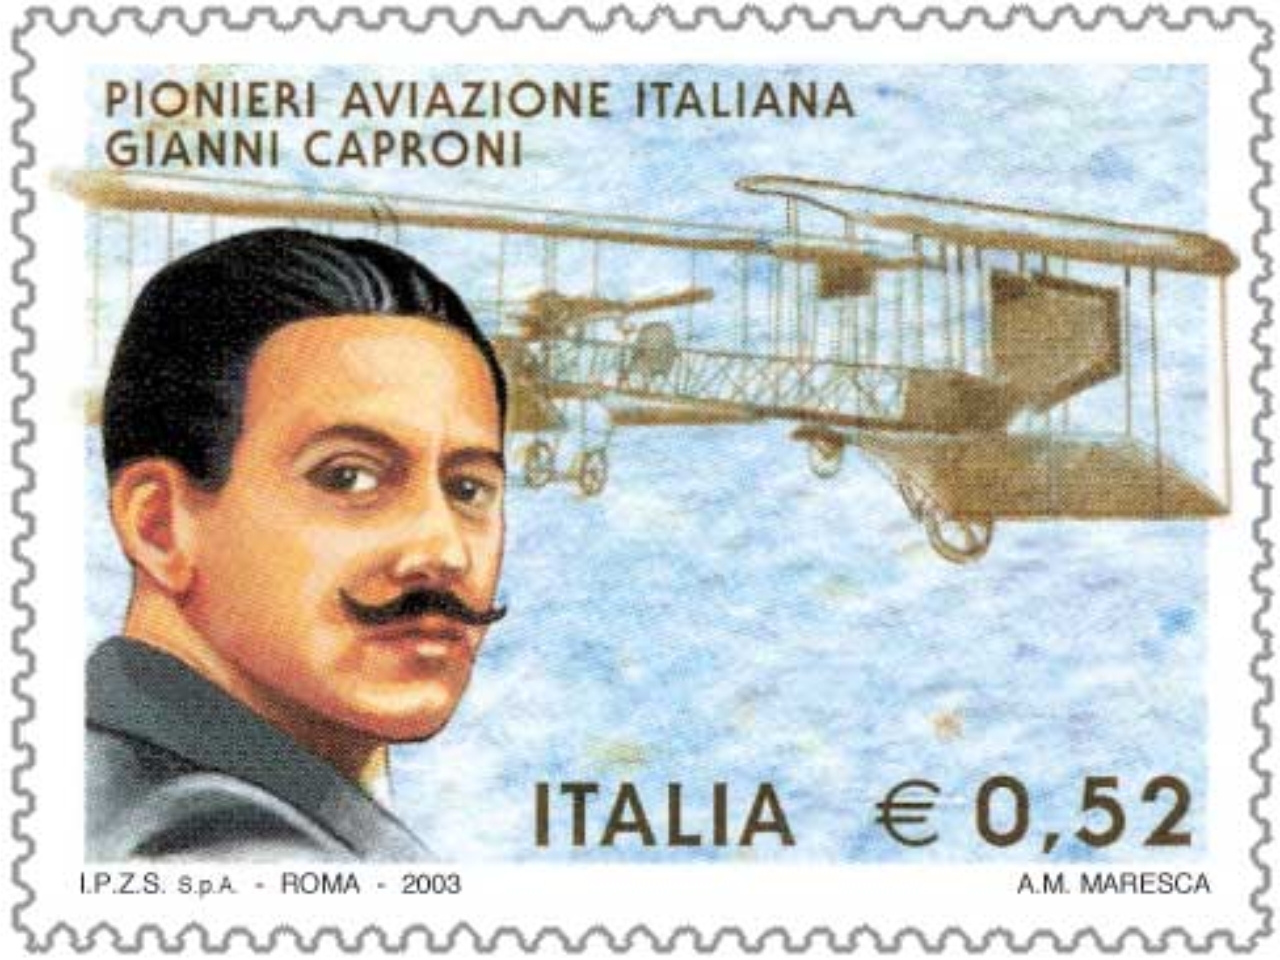 Gianni Caproni